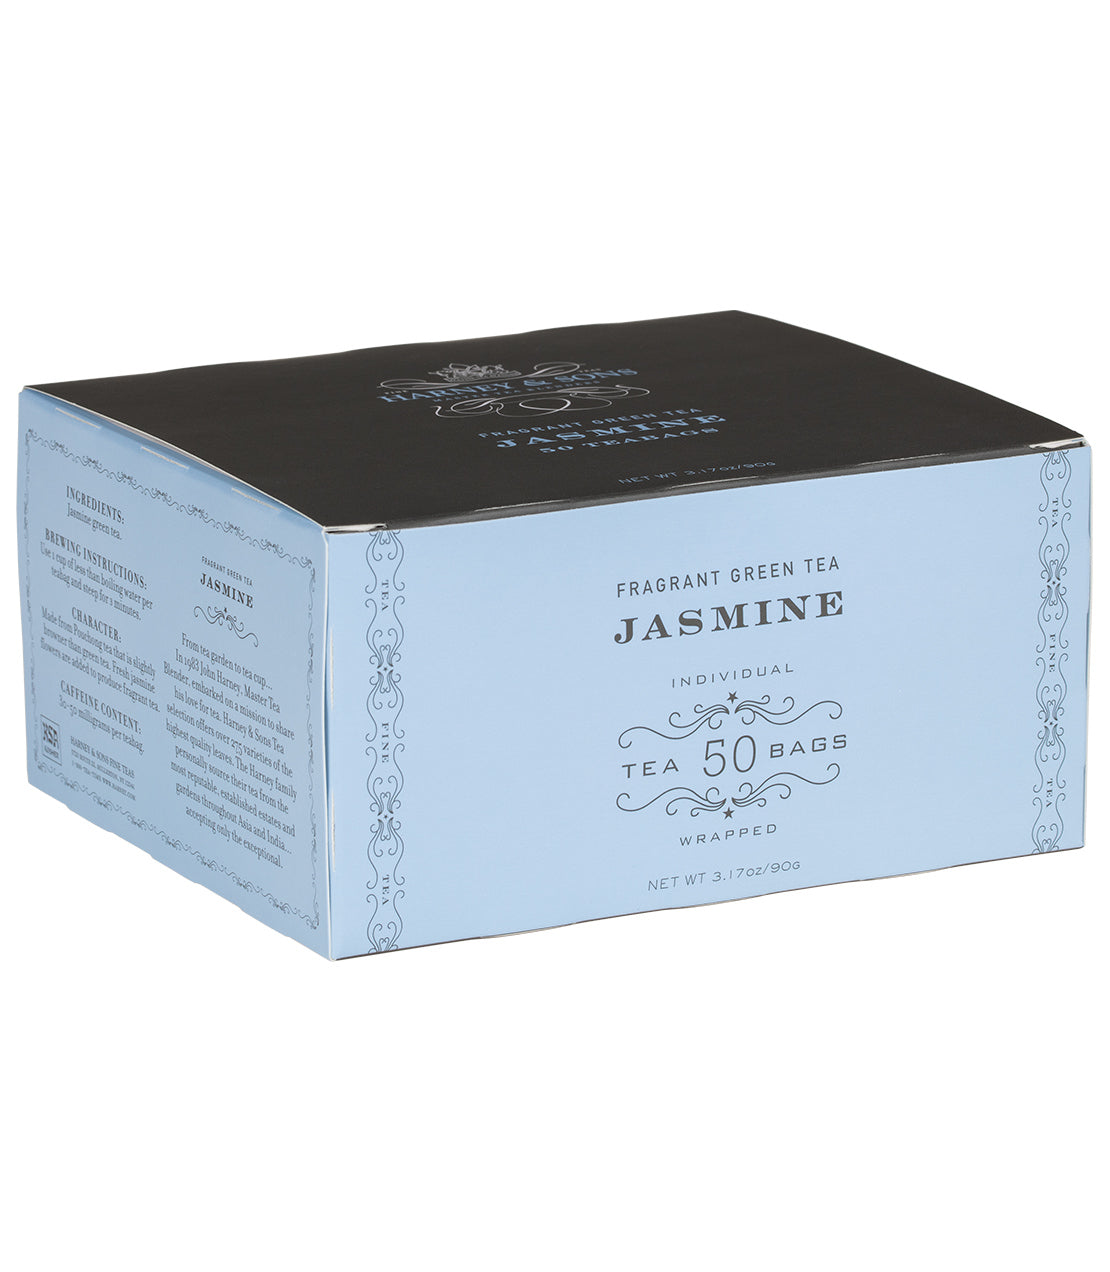 Jasmine Tea - Teabags 50 CT Foil Wrapped Teabags - Harney & Sons Fine Teas